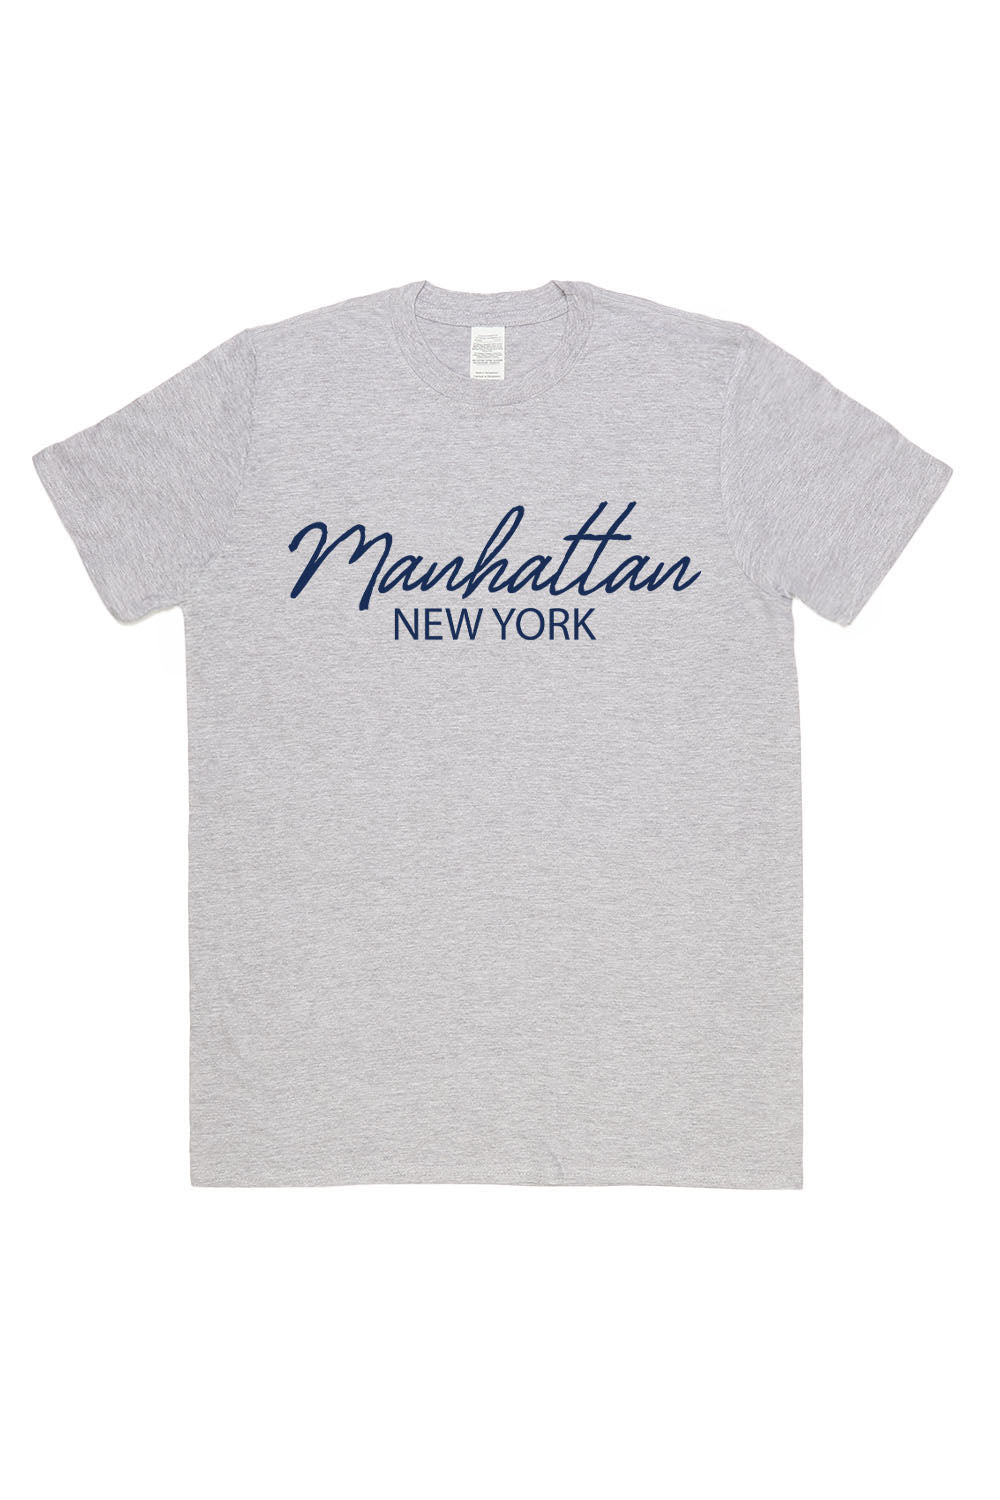 Manhattan T-Shirt in Ash Grey (Custom Packs)